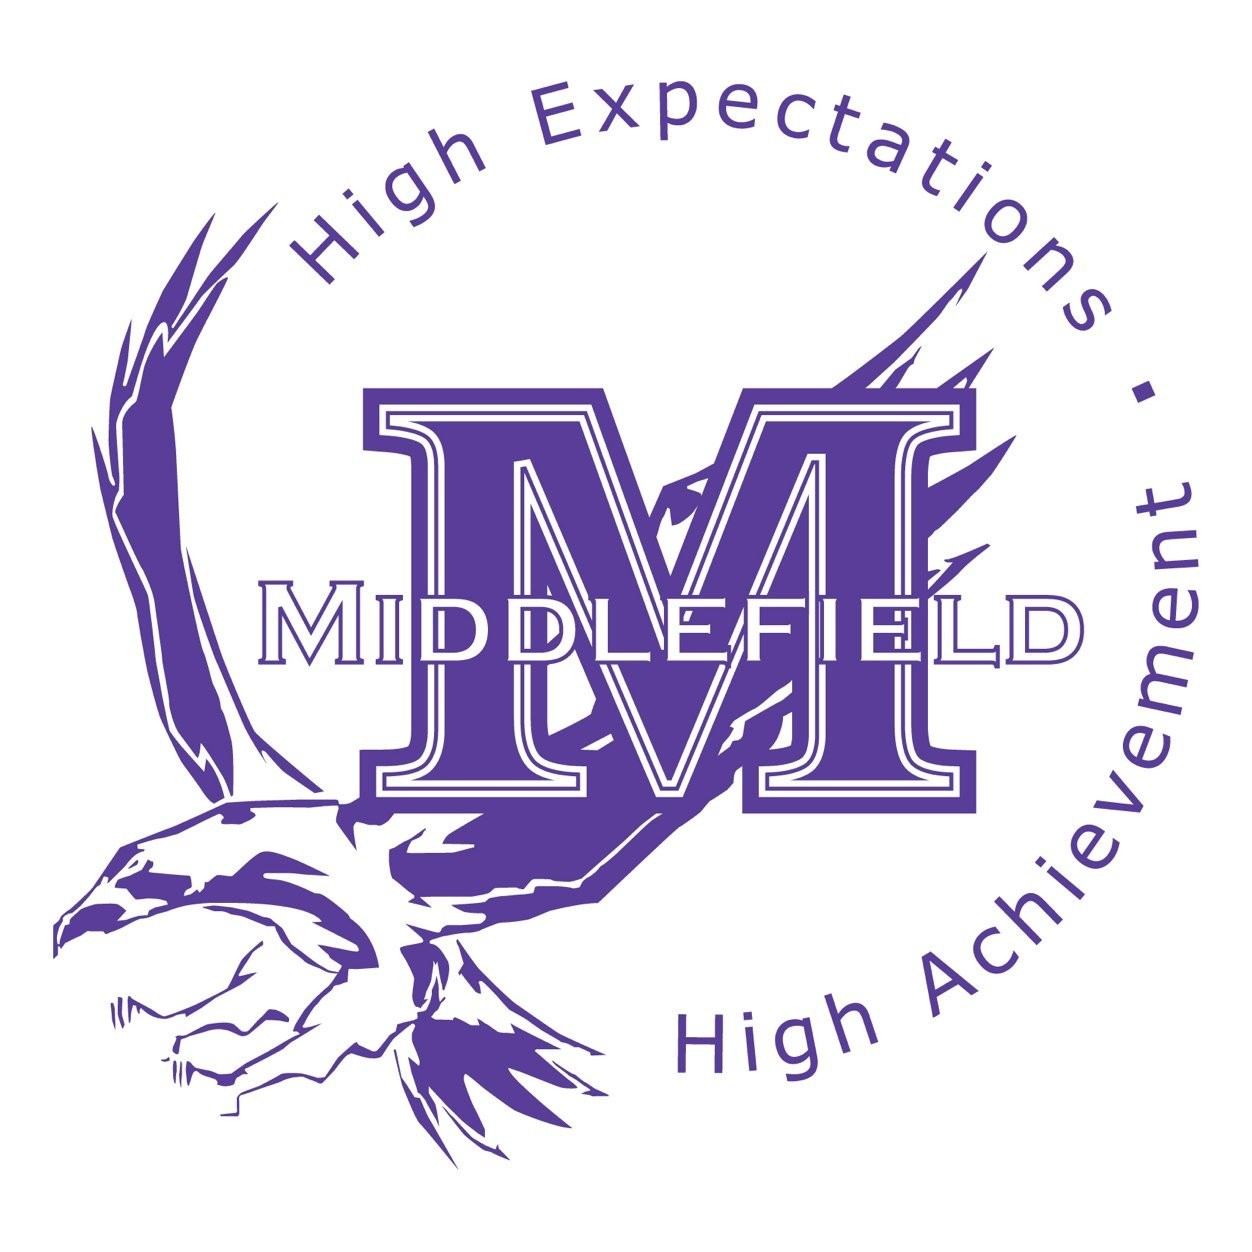 Middlefield Collegiate Institute